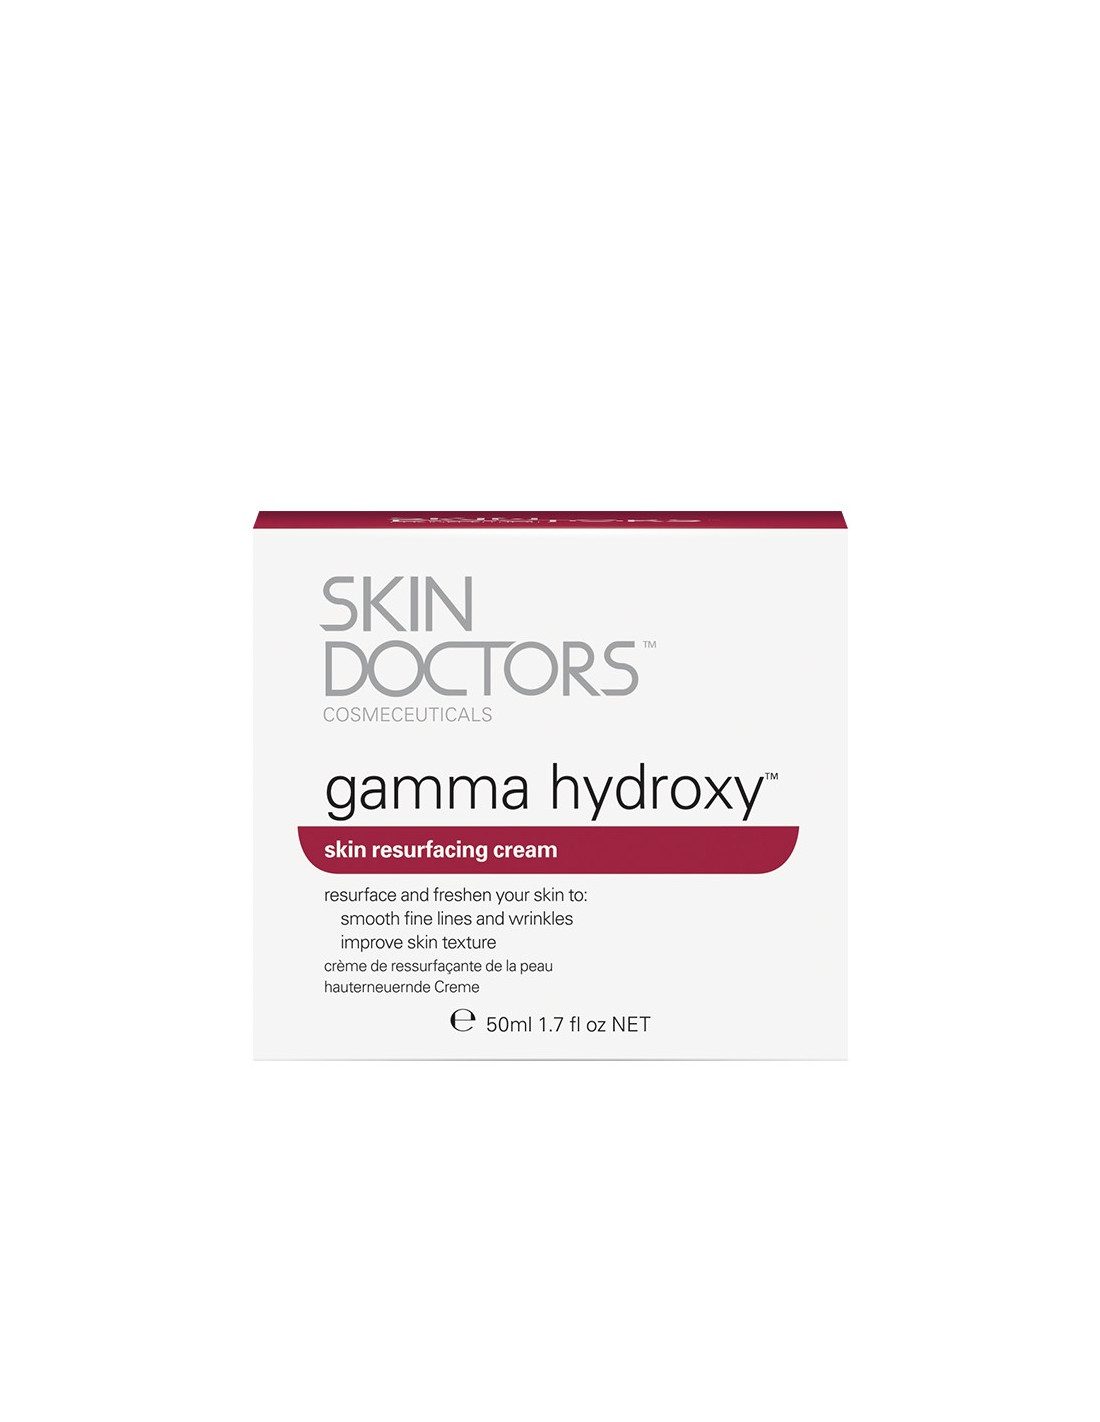 Skin Doctors Gamma Hydroxy - Reviews